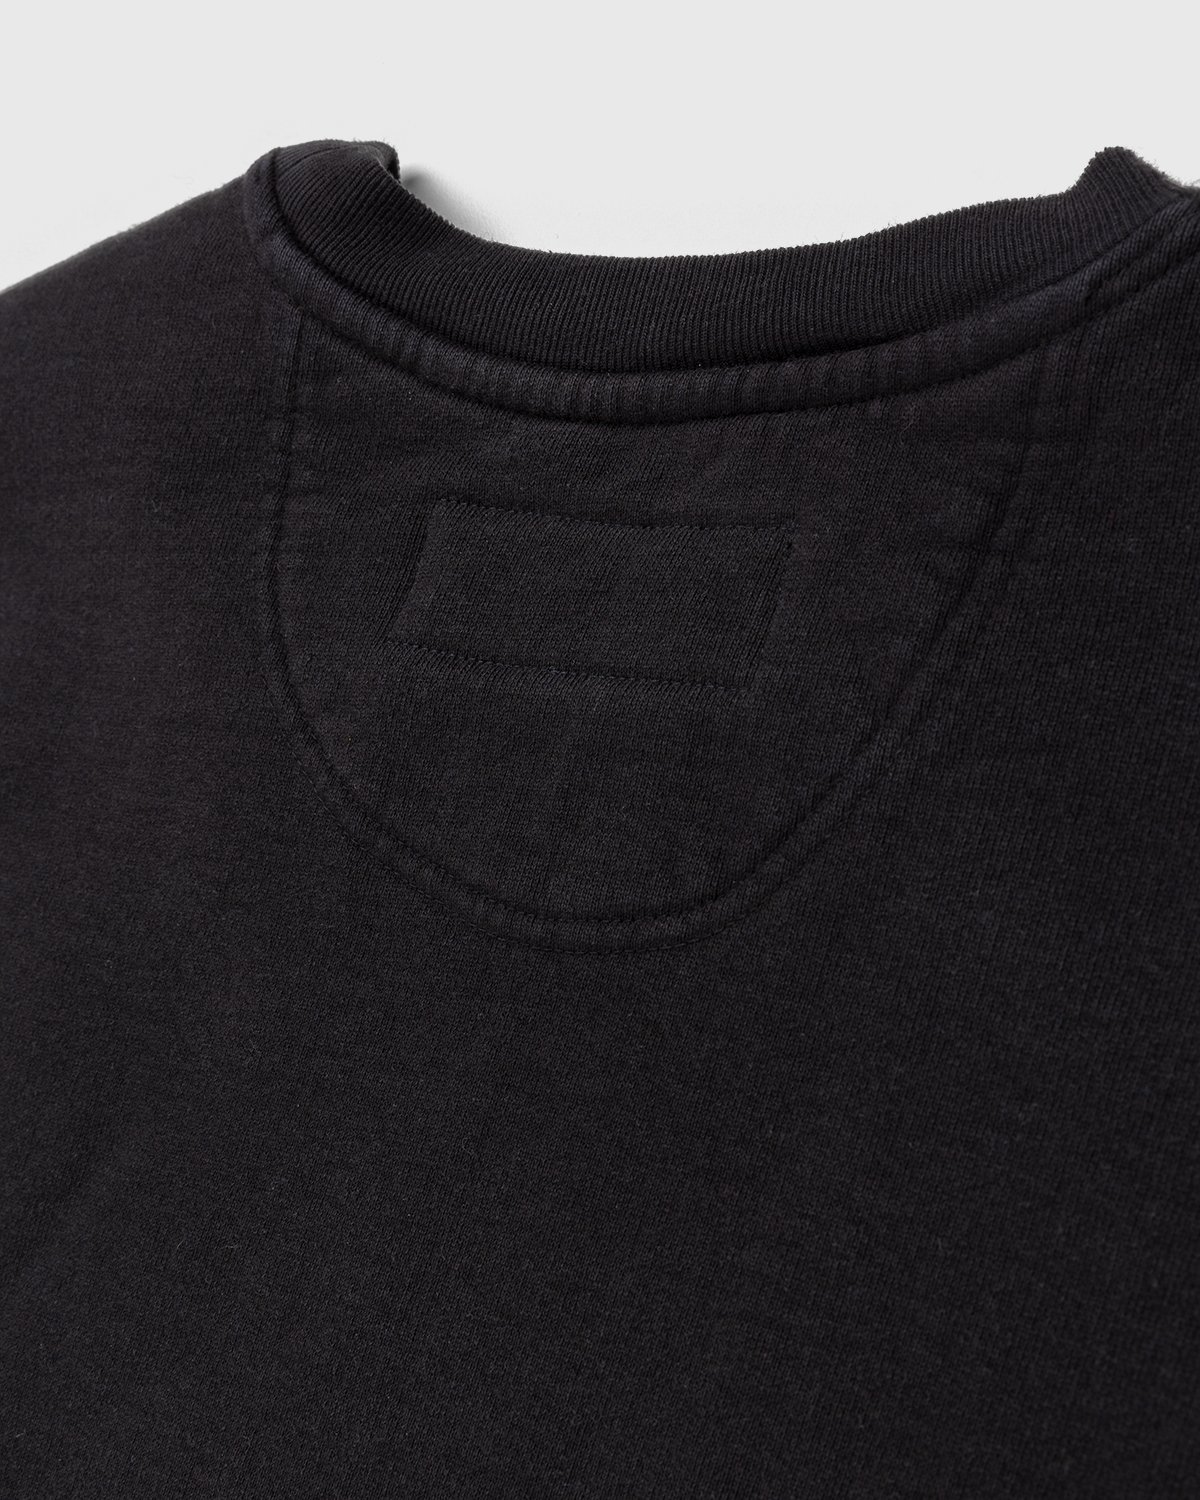 Noon Goons - Garden Sweatshirt Black - Clothing - Black - Image 5